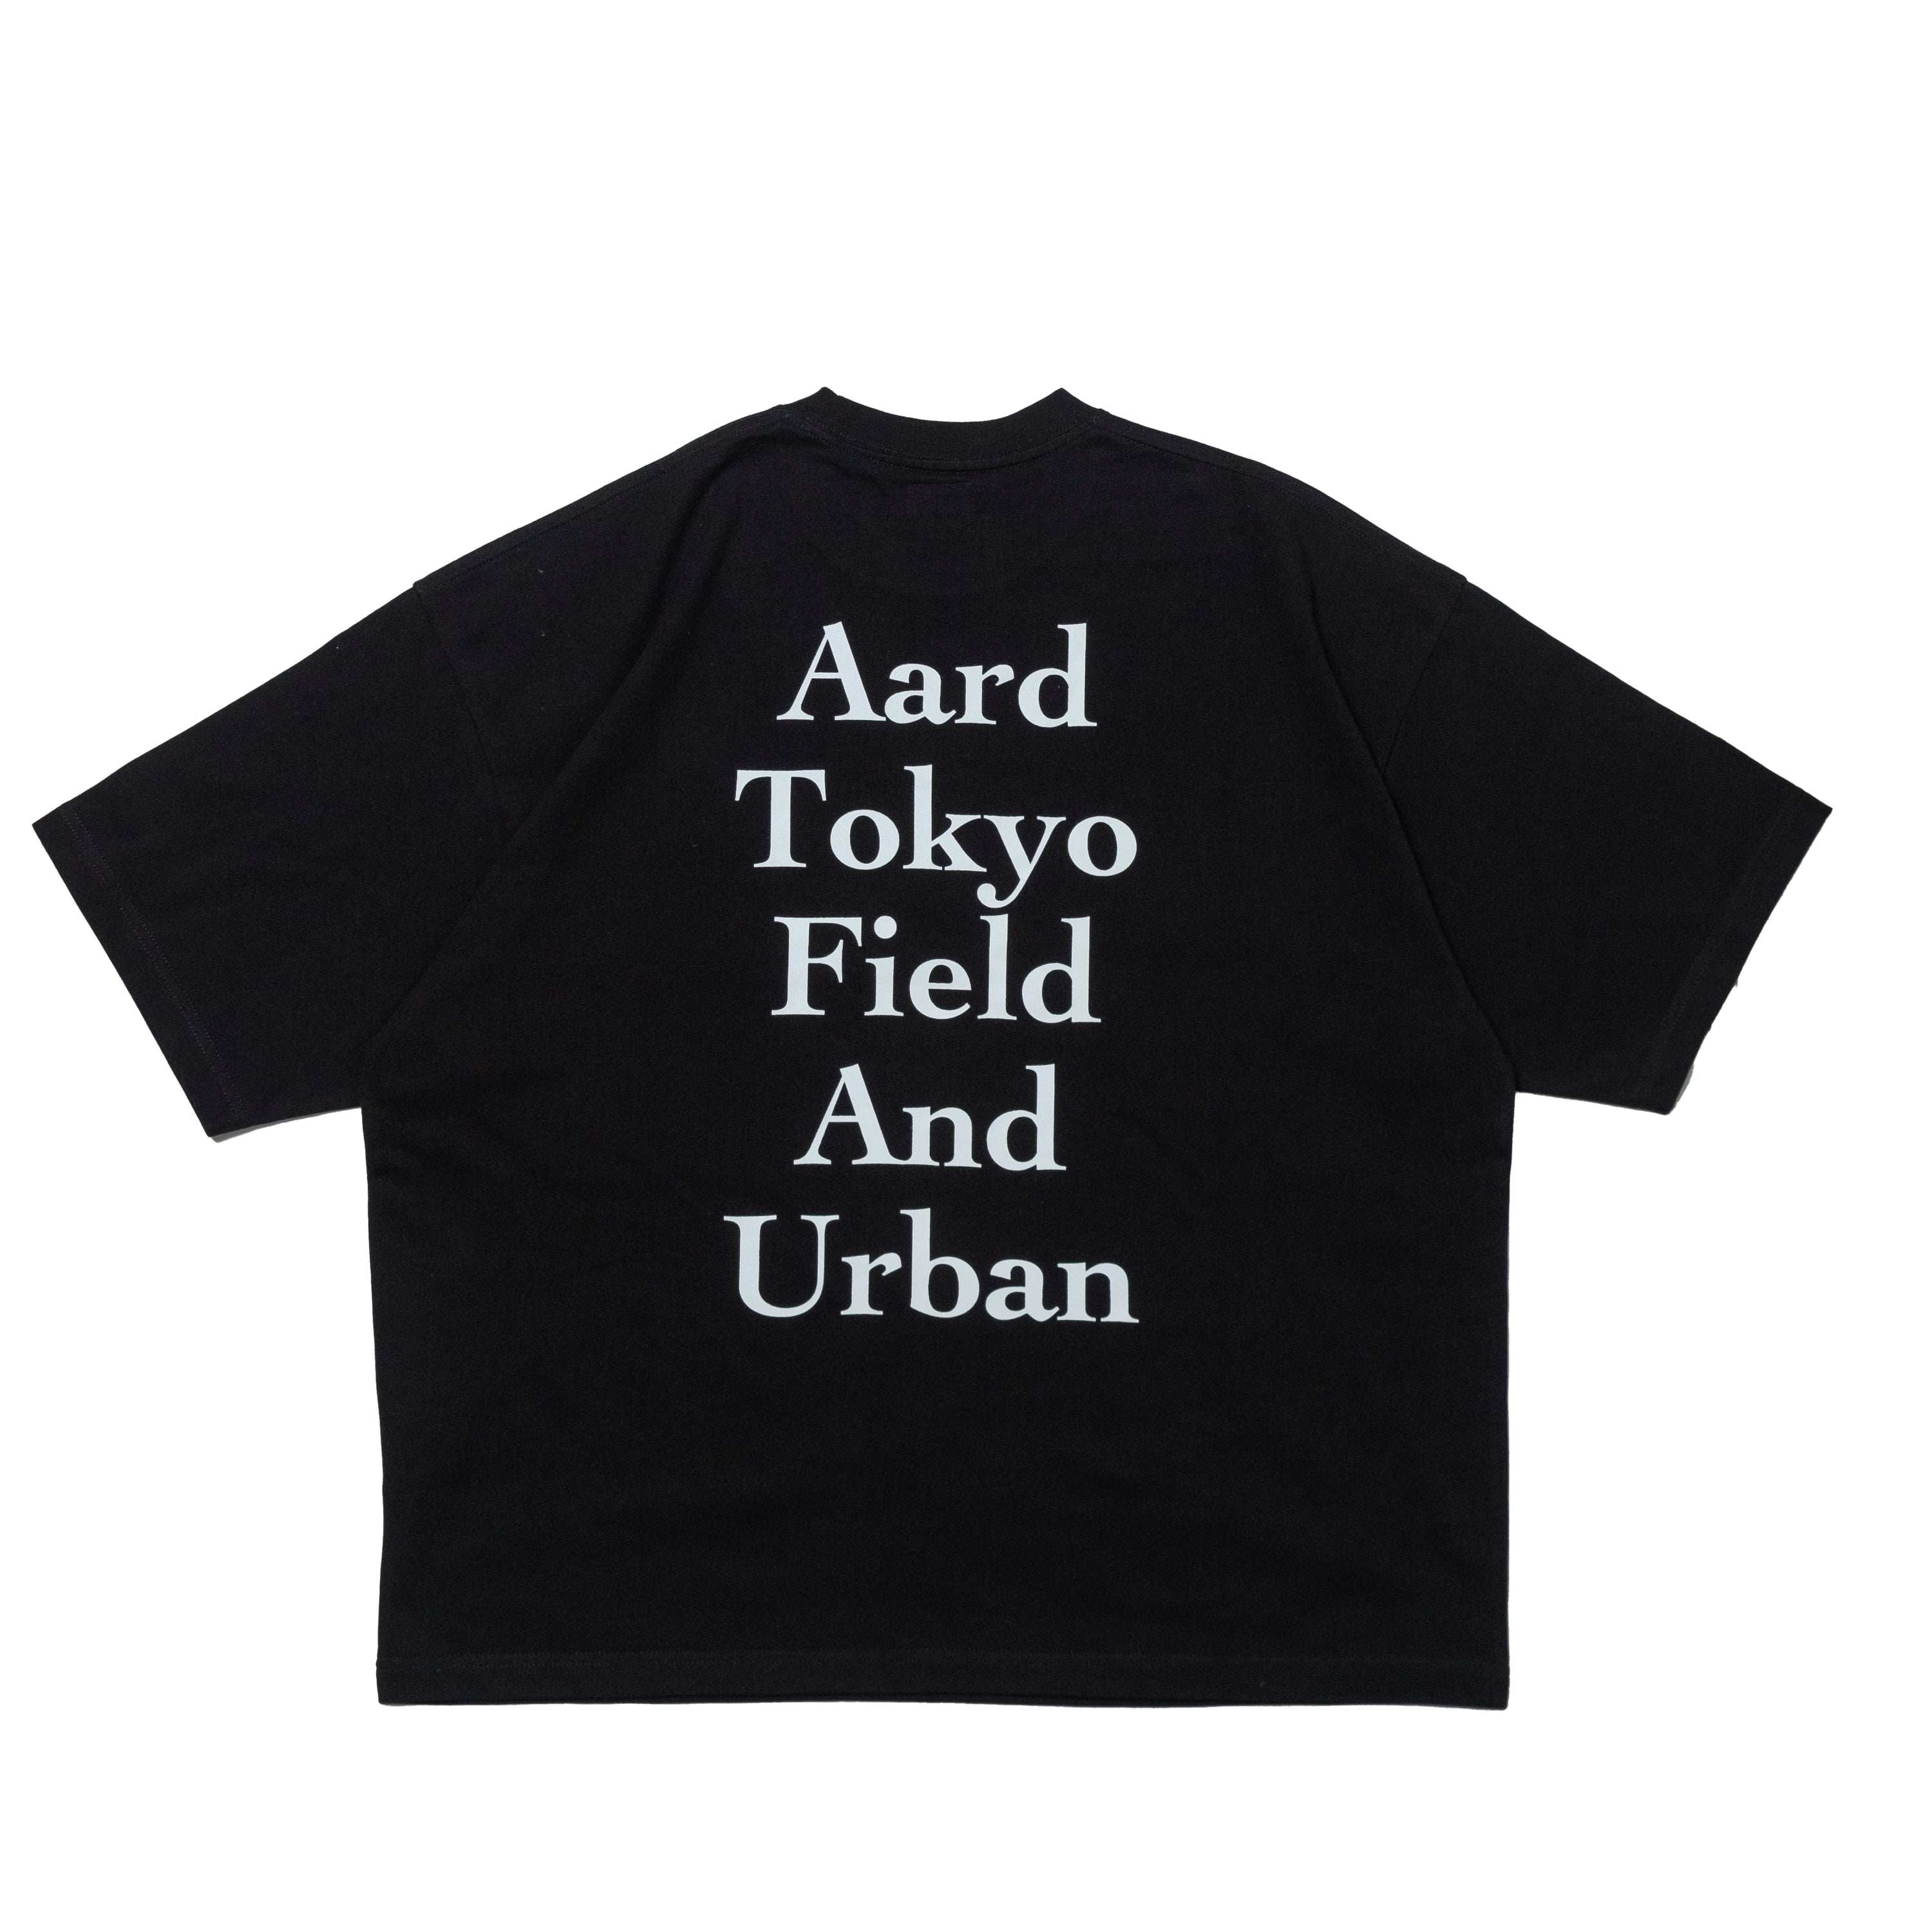 Aard Tokyo Field And Urban SS Tee Black